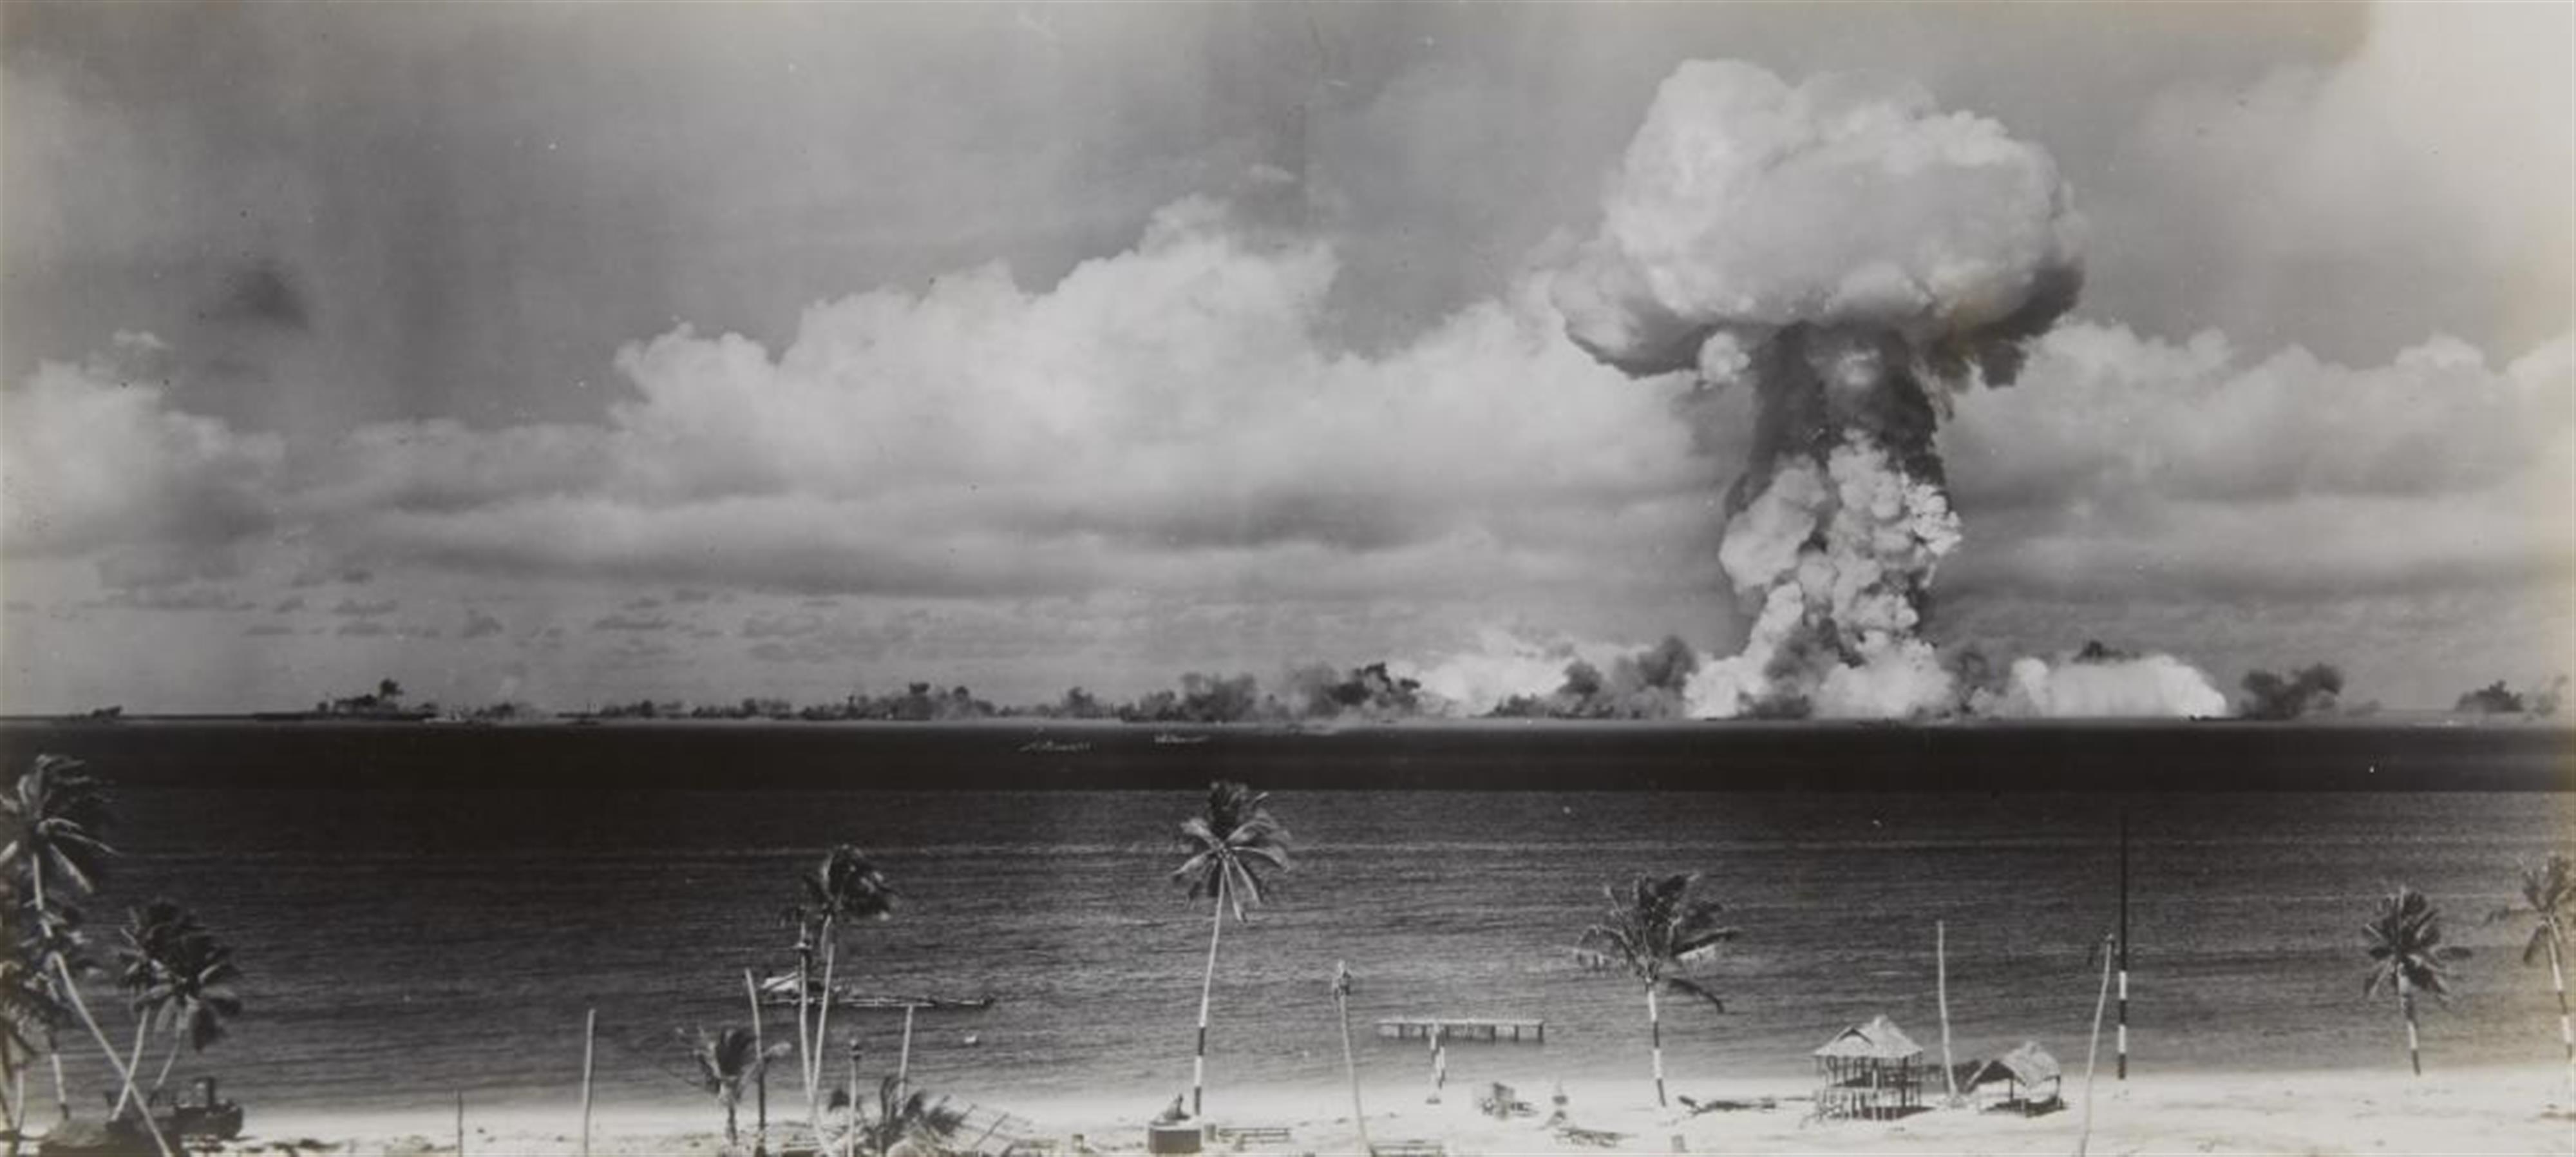 Joint Army Task Force One Photo - Untitled (Underwater atomic bomb, Bikini Atoll, 9 July 1946) - image-1